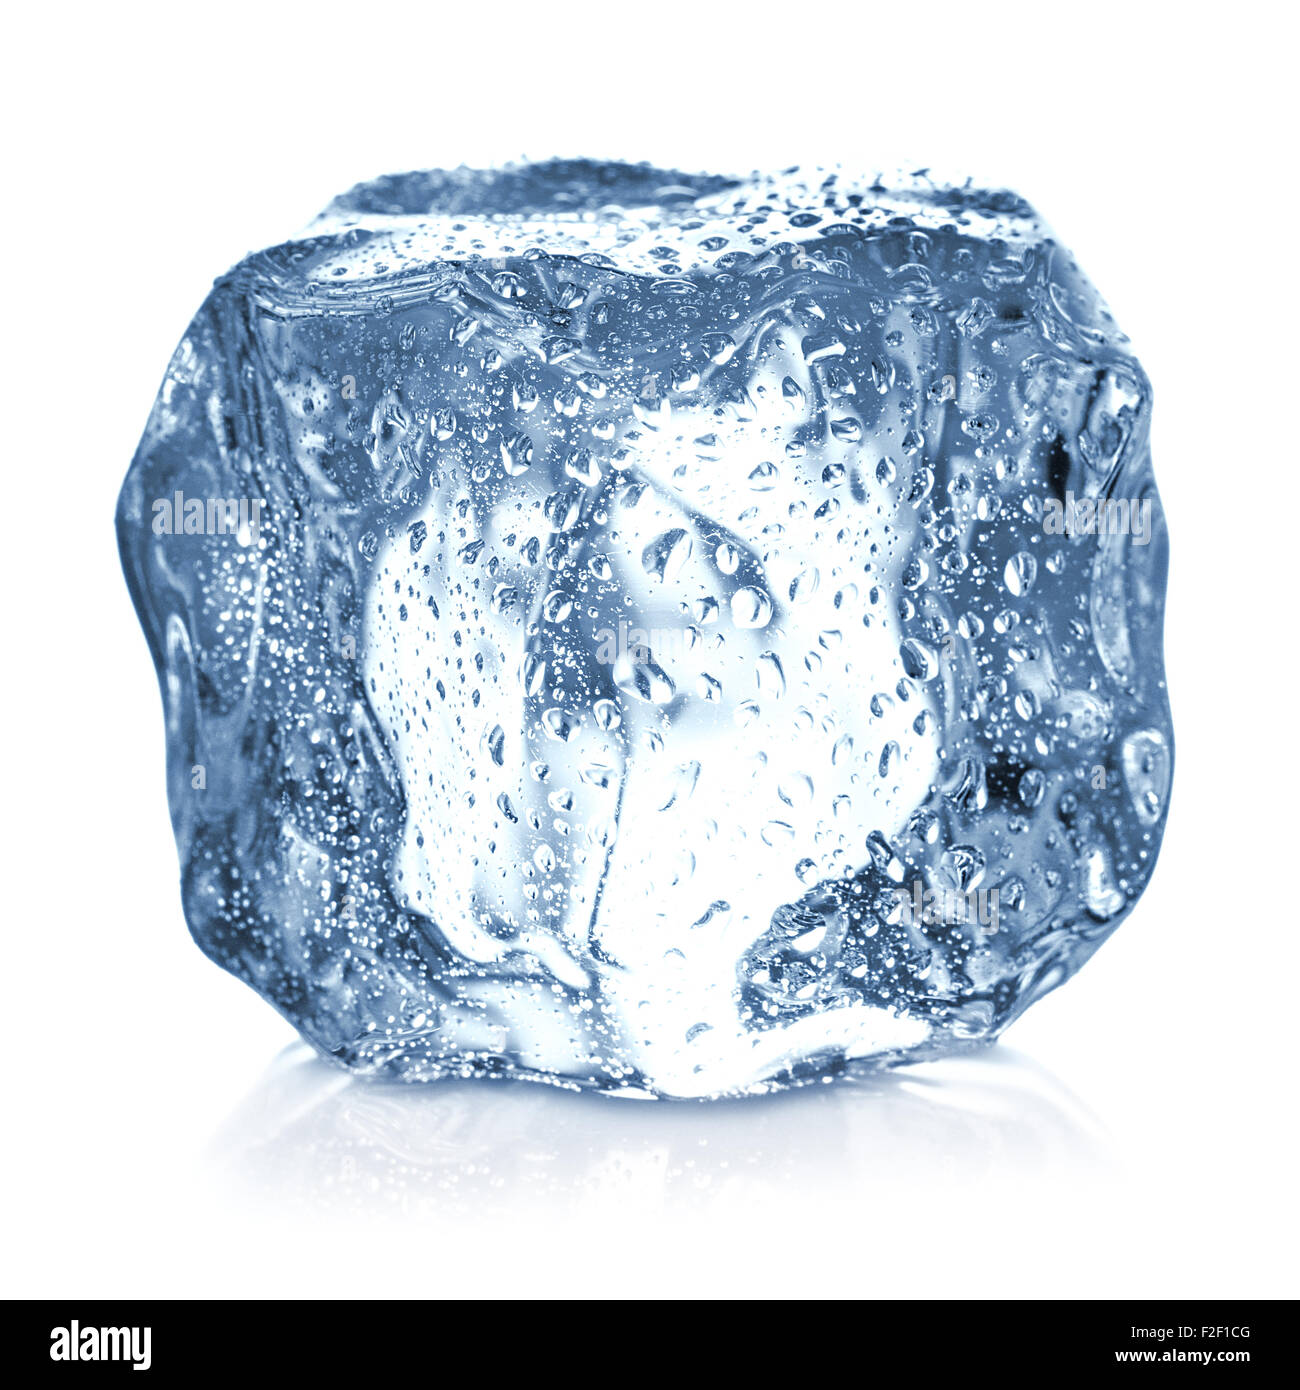 Cubo de hielo con gotas de agua cercano aislado sobre un fondo blanco. Foto de stock